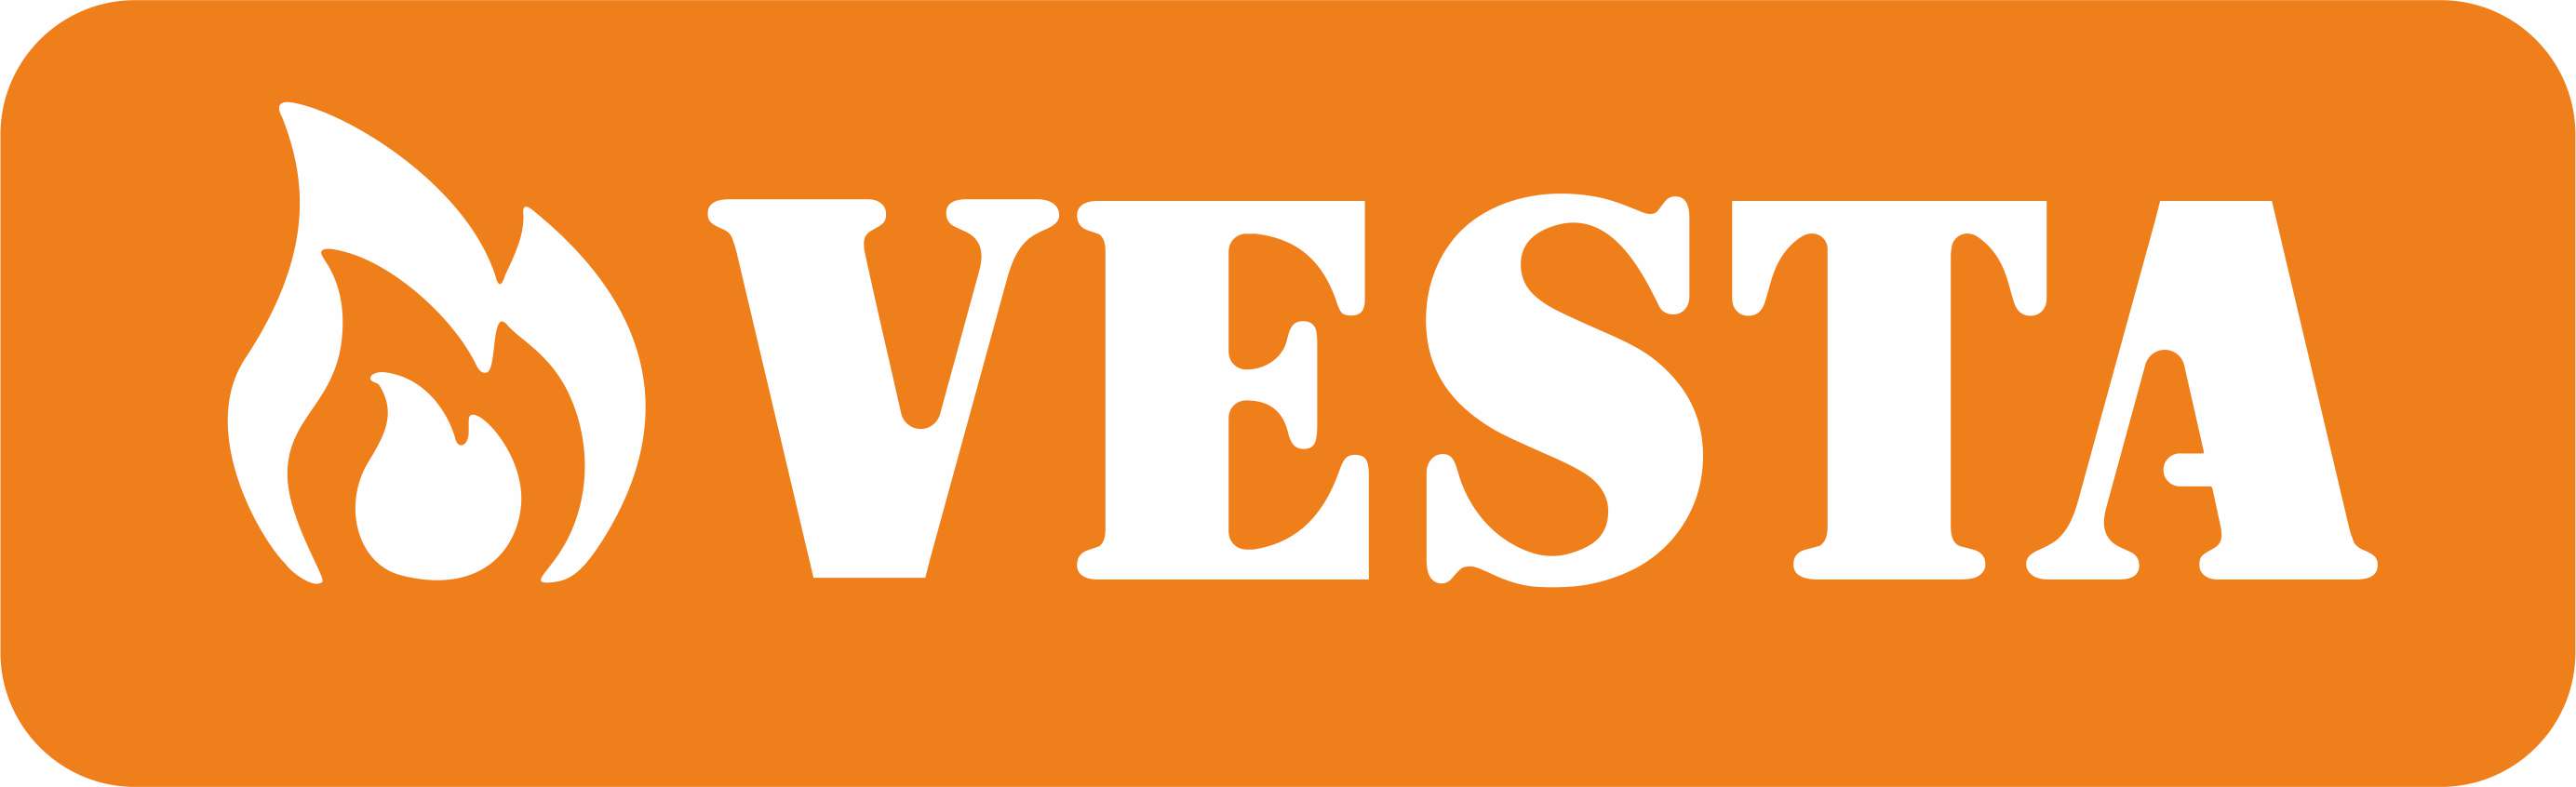 Vesta Ovens and Grills logo